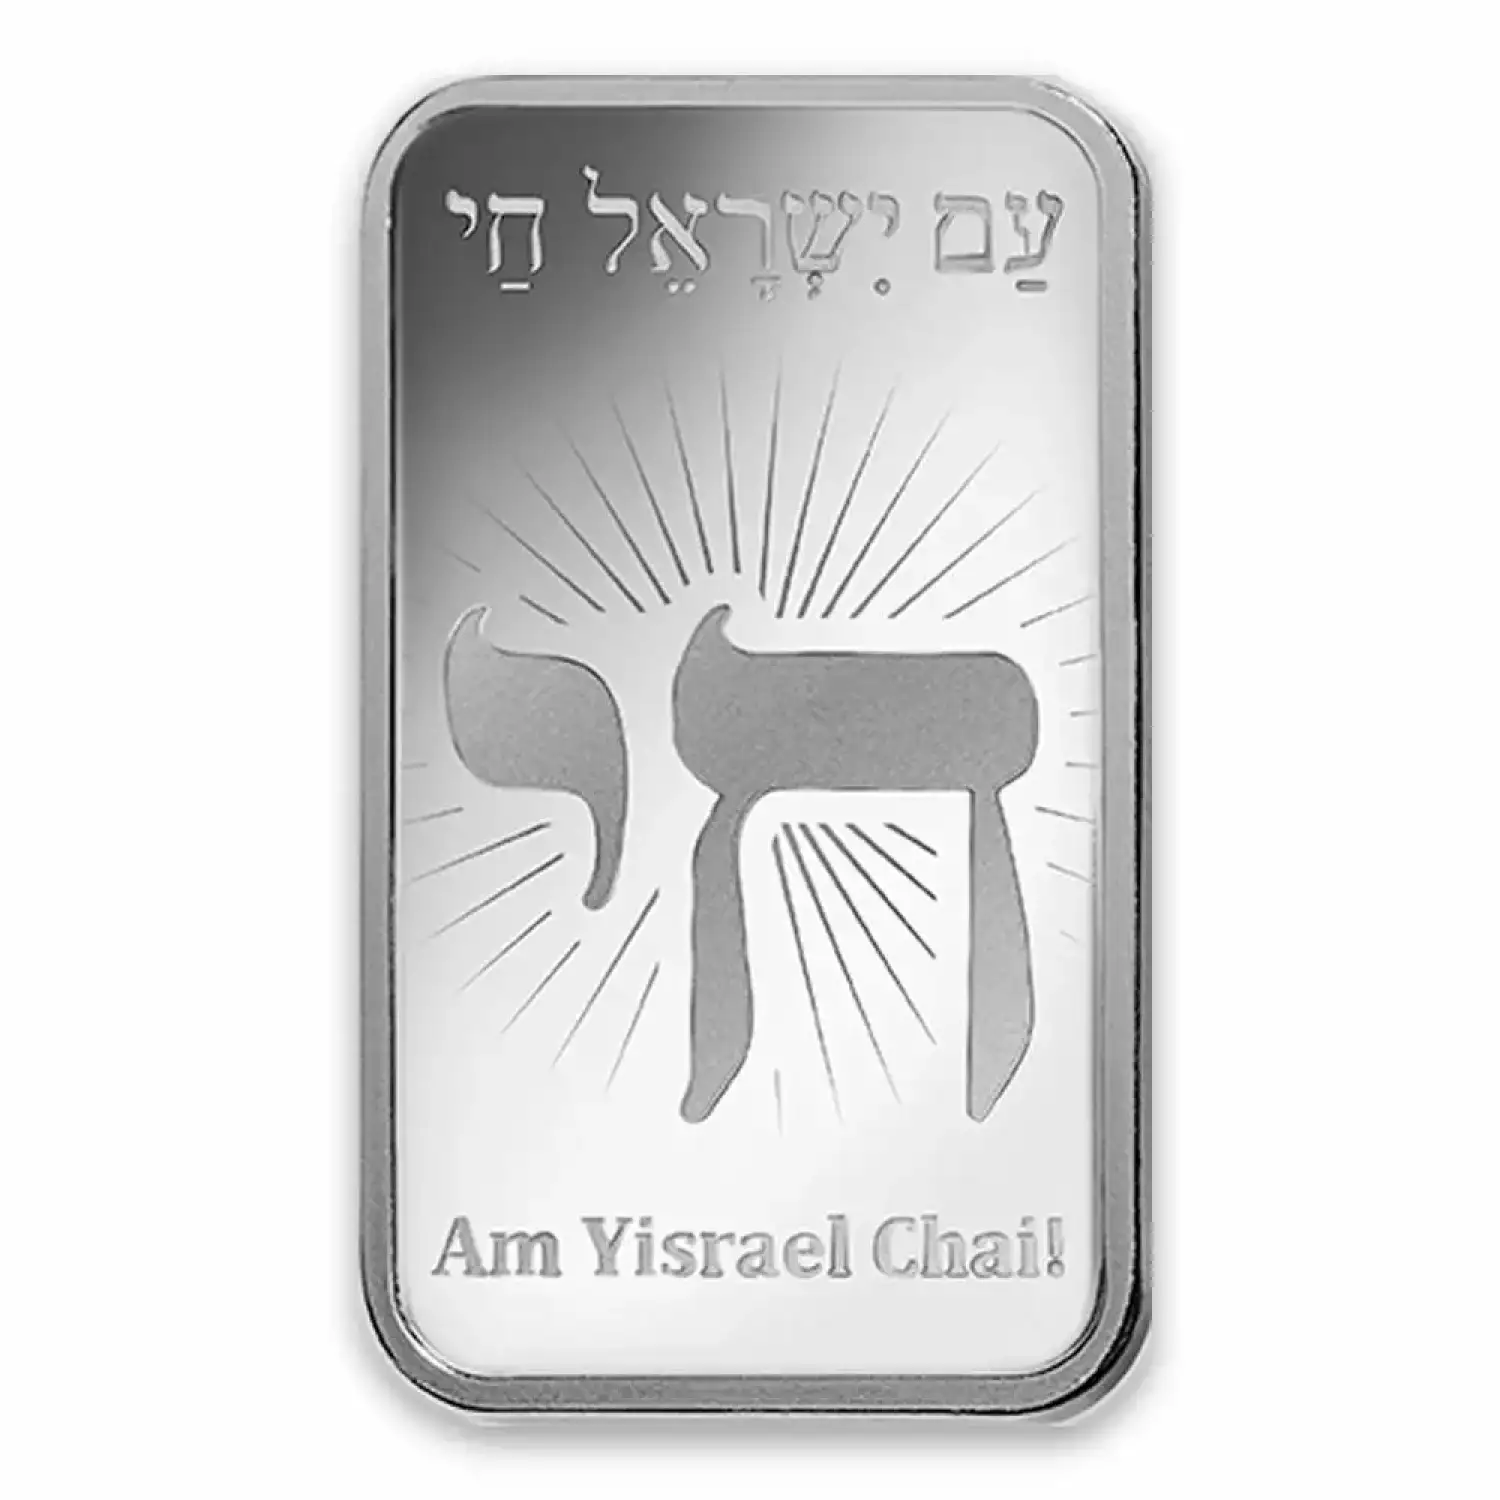 1 oz PAMP Silver Bar - Am Yisrael Chai! (2)